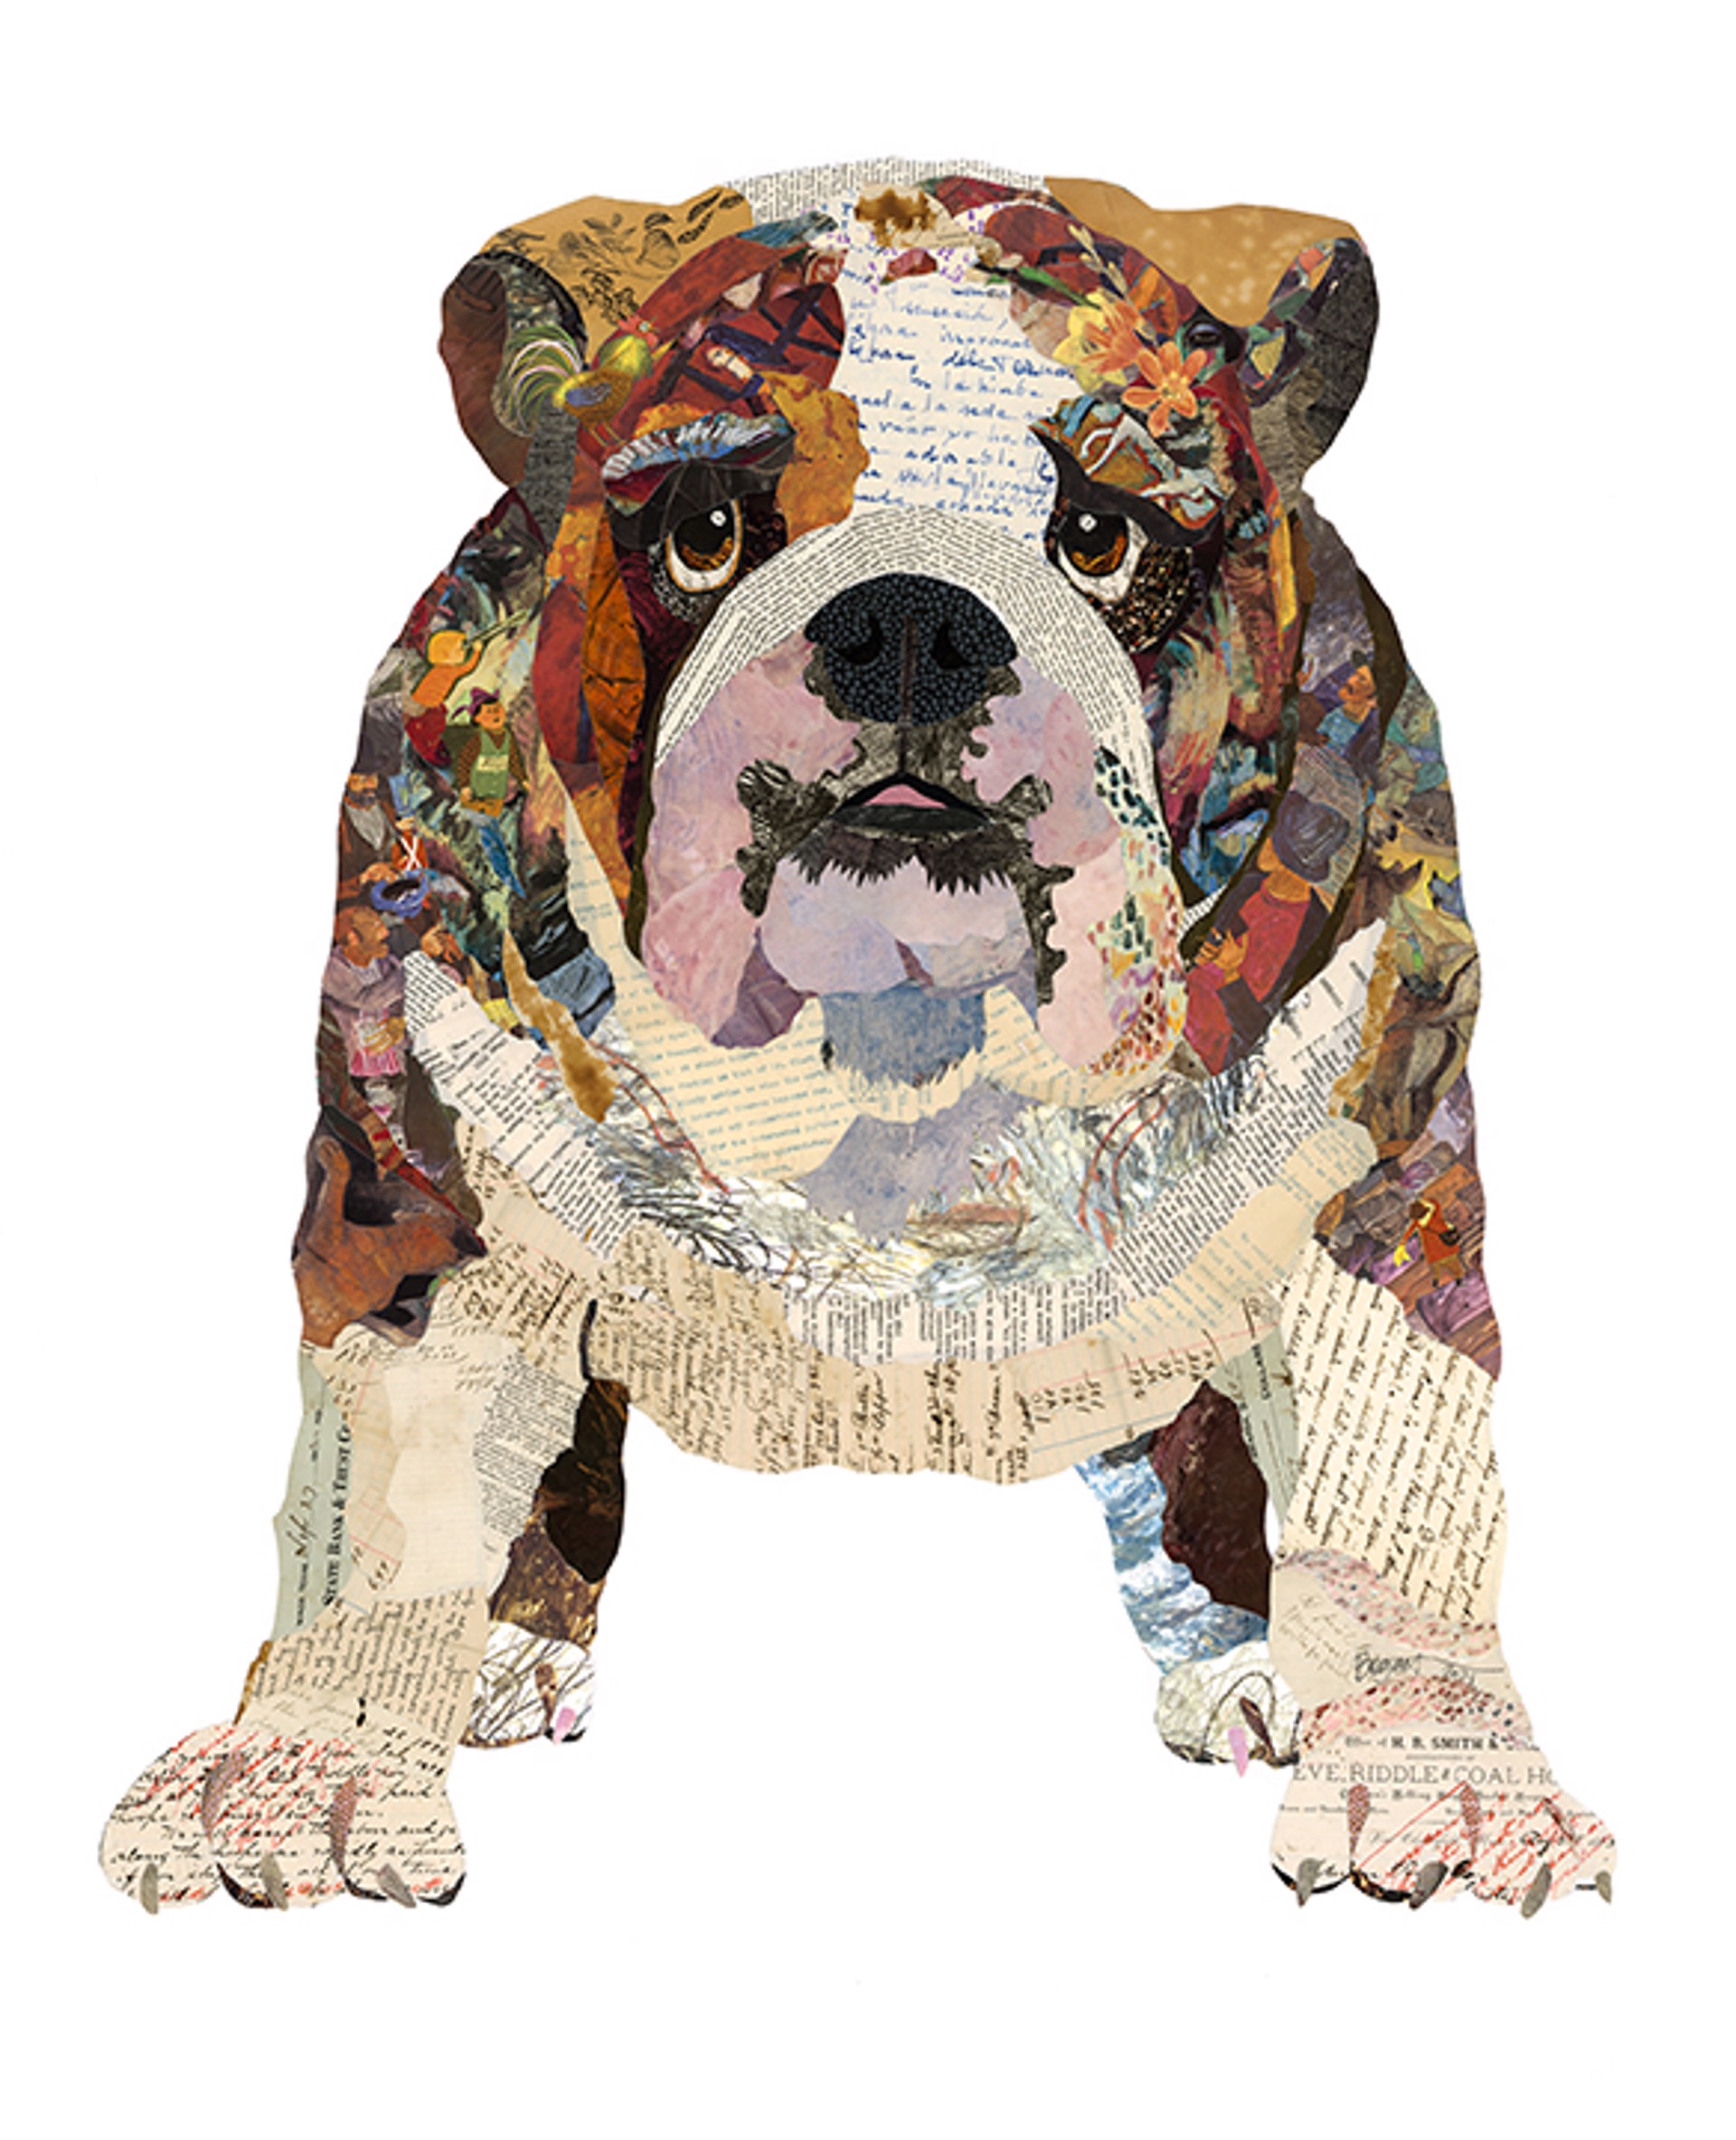 Bulldog 1 by Brenda Bogart - Prints